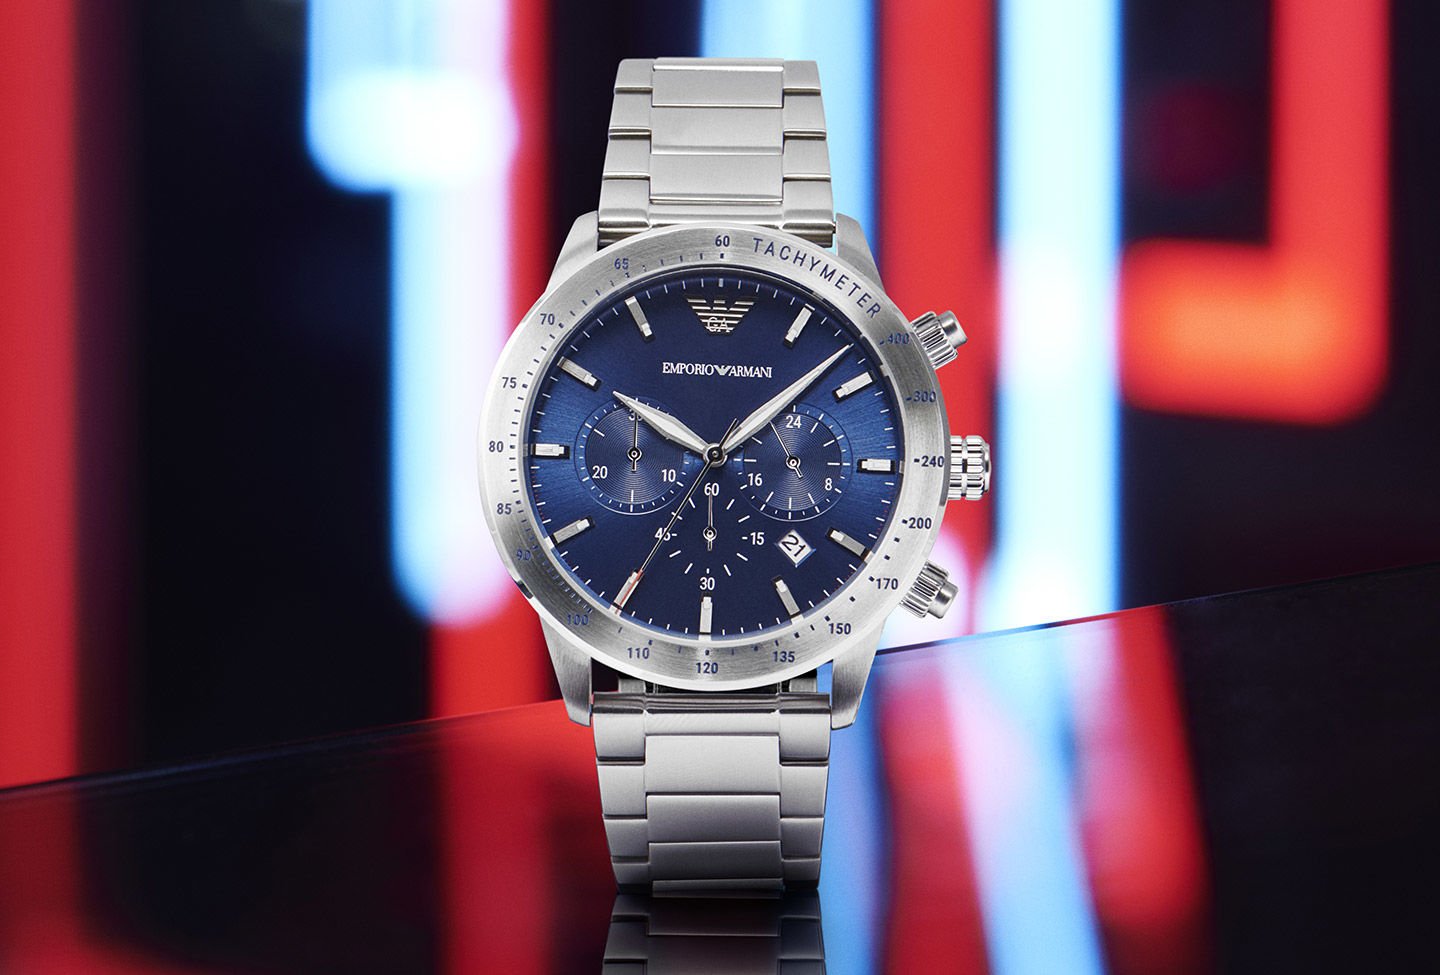 Emporio Armani: Affordable And High-Quality Timepiece